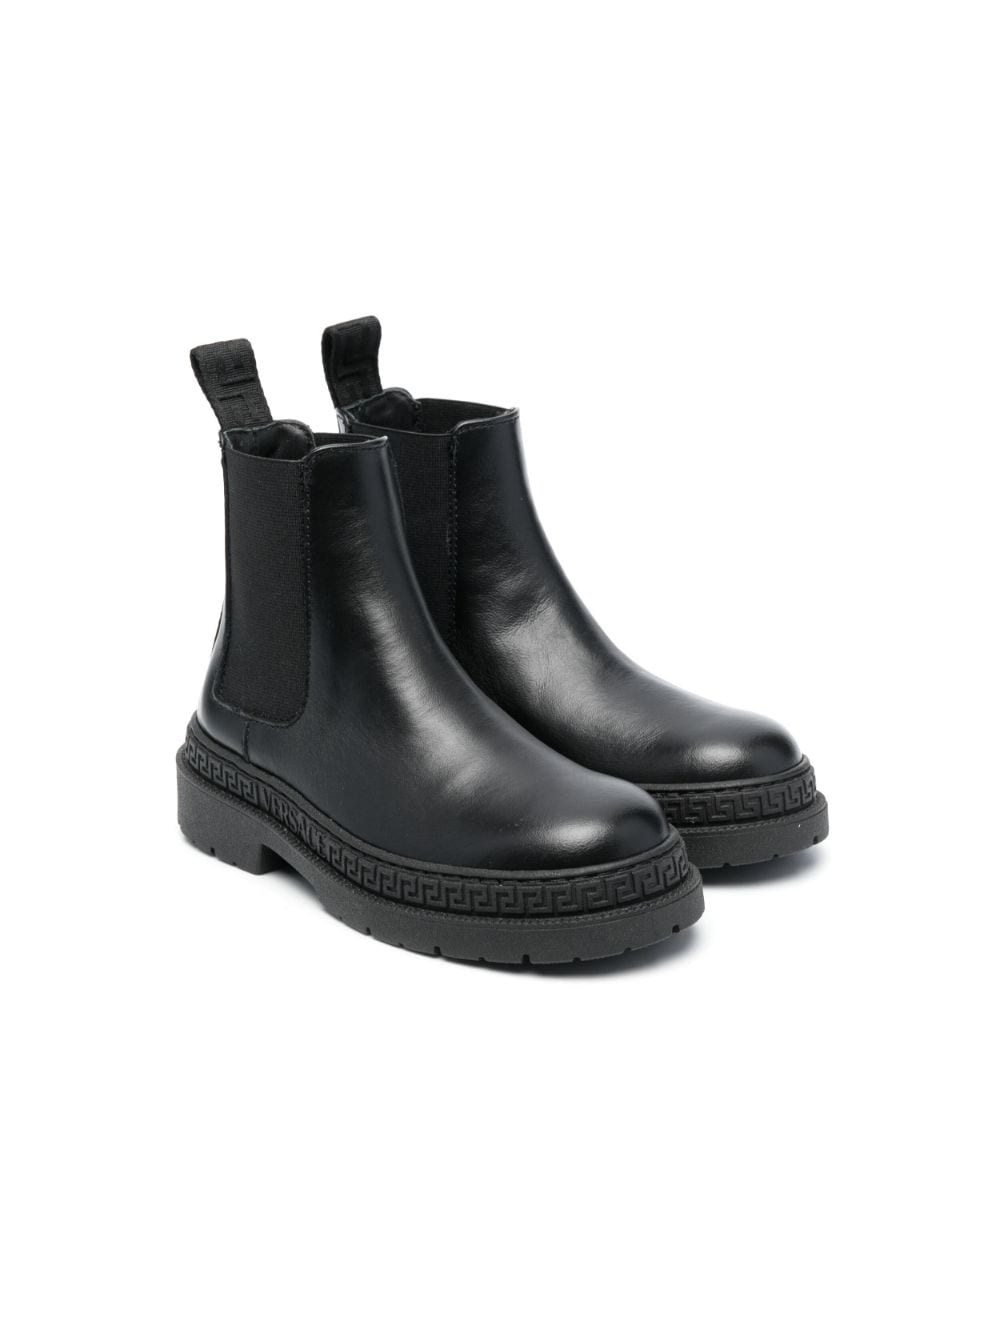 Black leather boy VERSACE chelsea boots | Carofiglio Junior